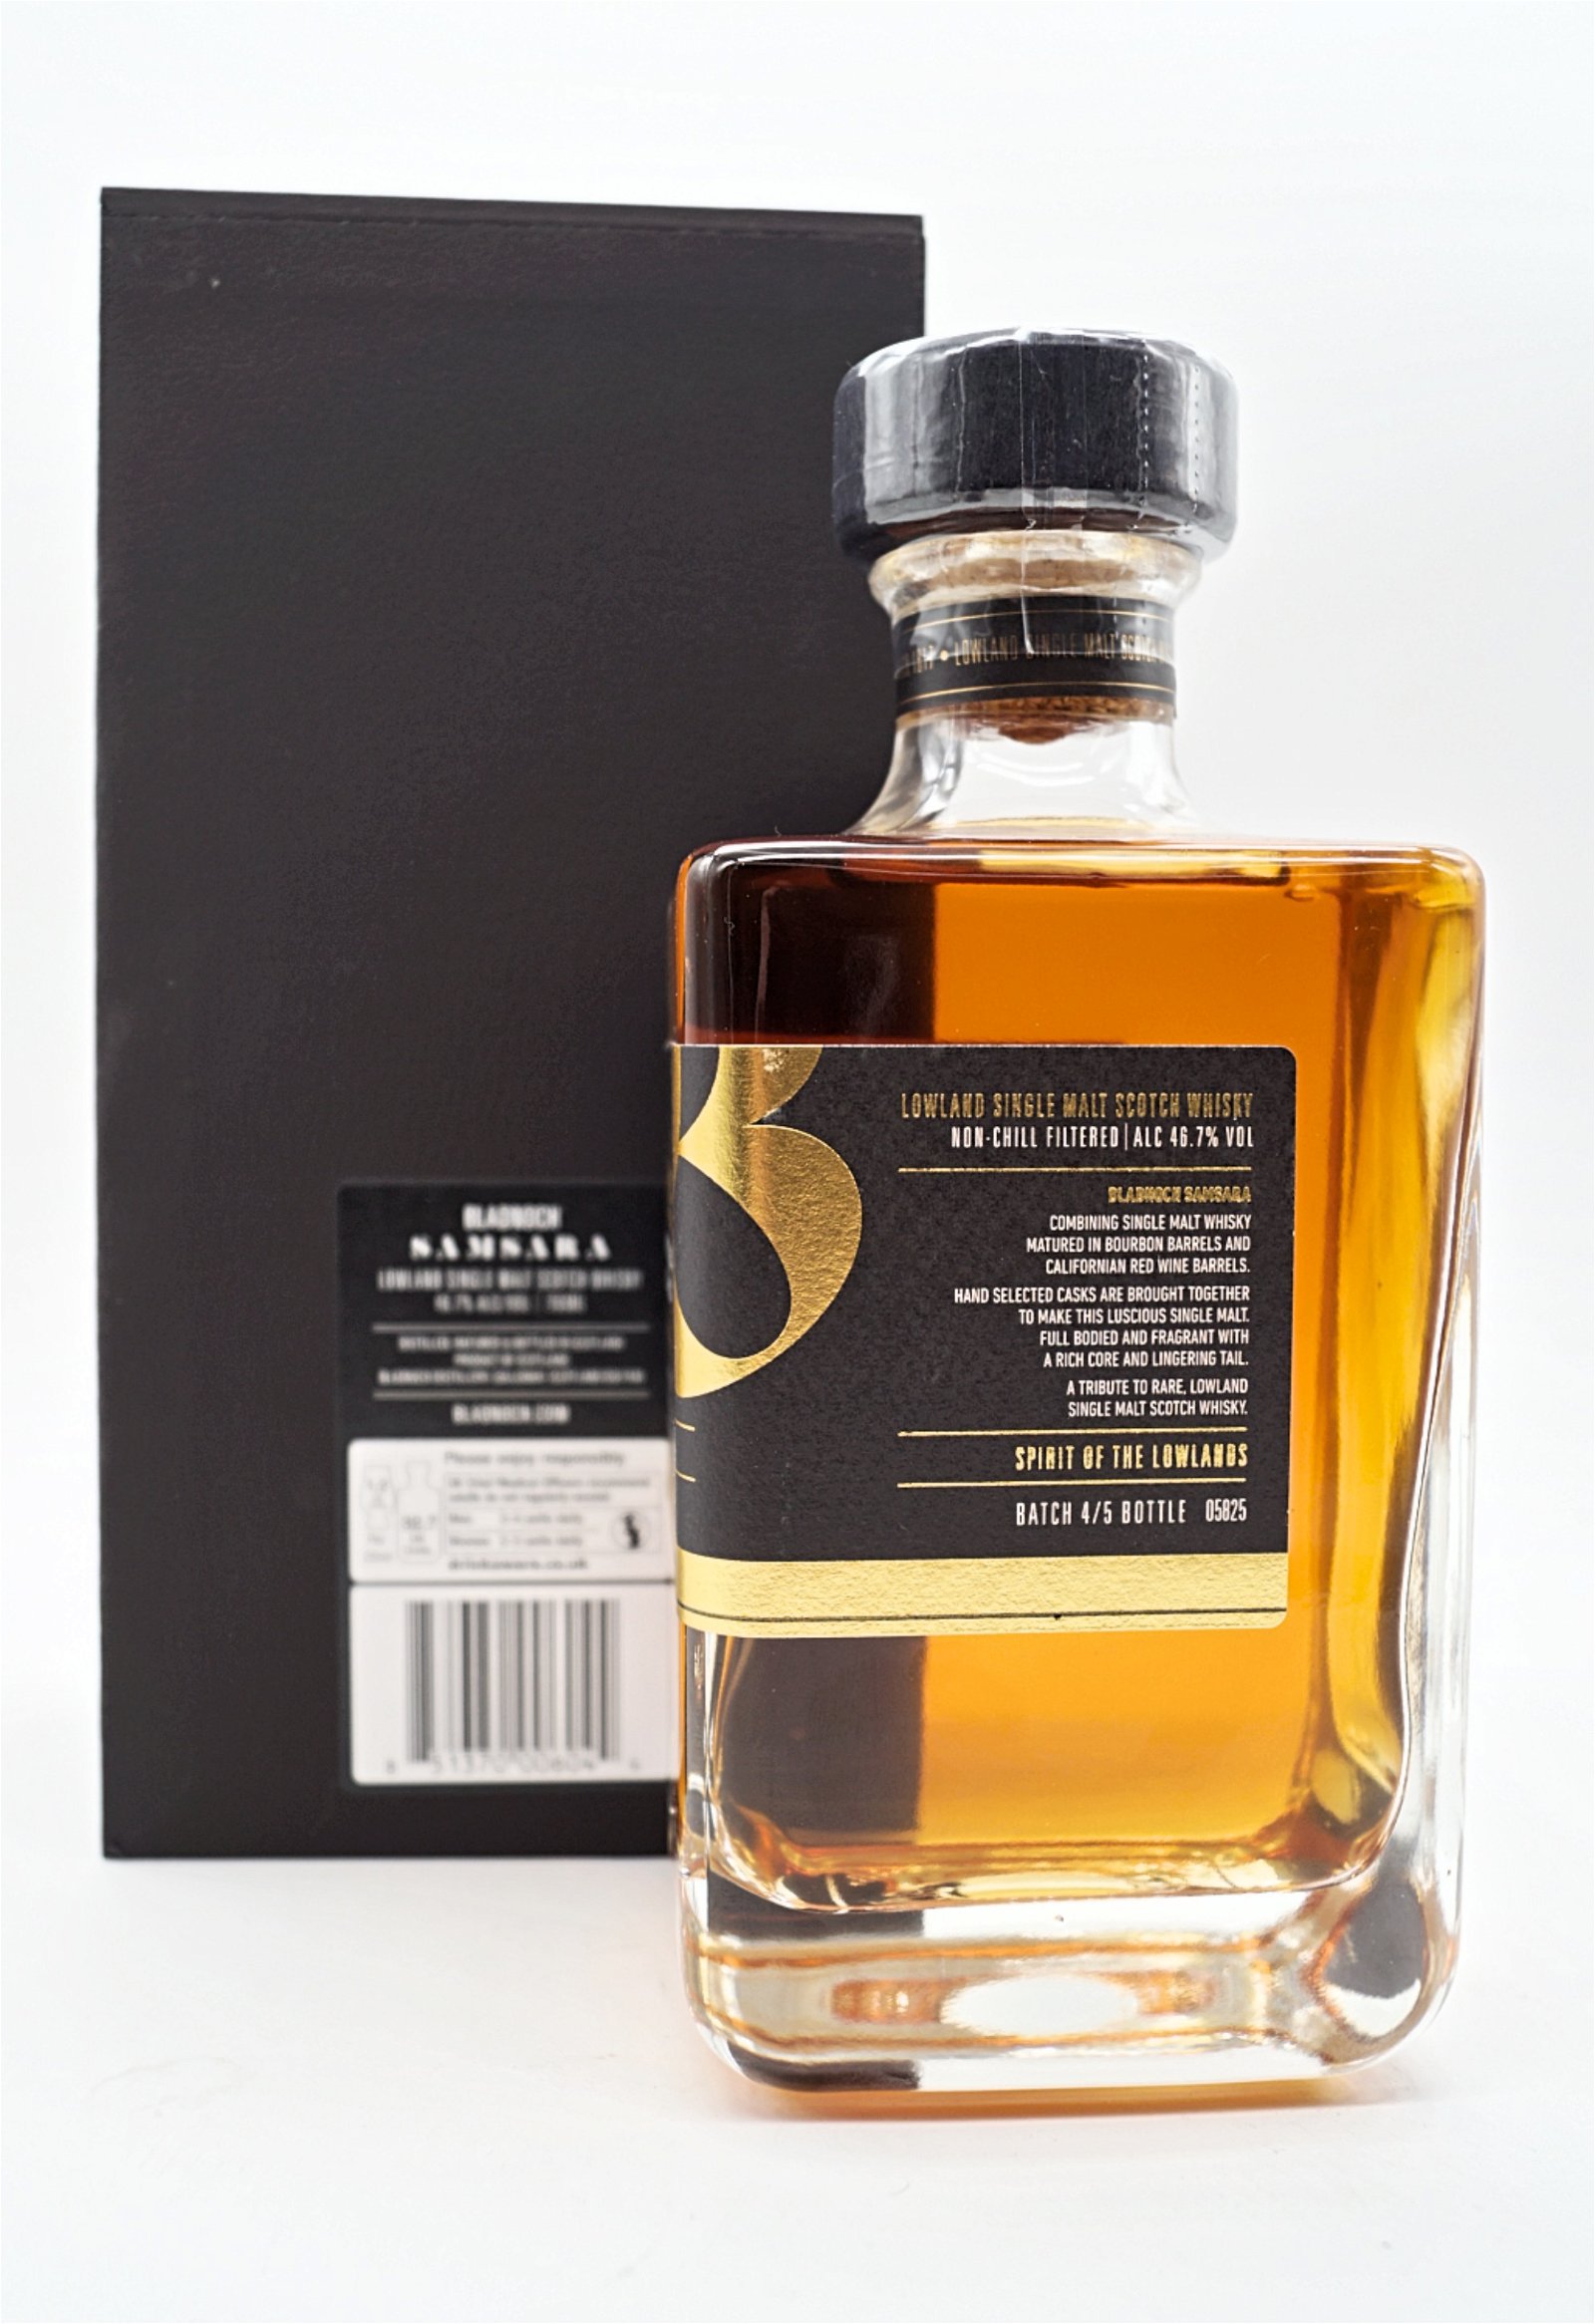 Bladnoch Samsara Limited Release Lowland Single Malt Scotch Whisky